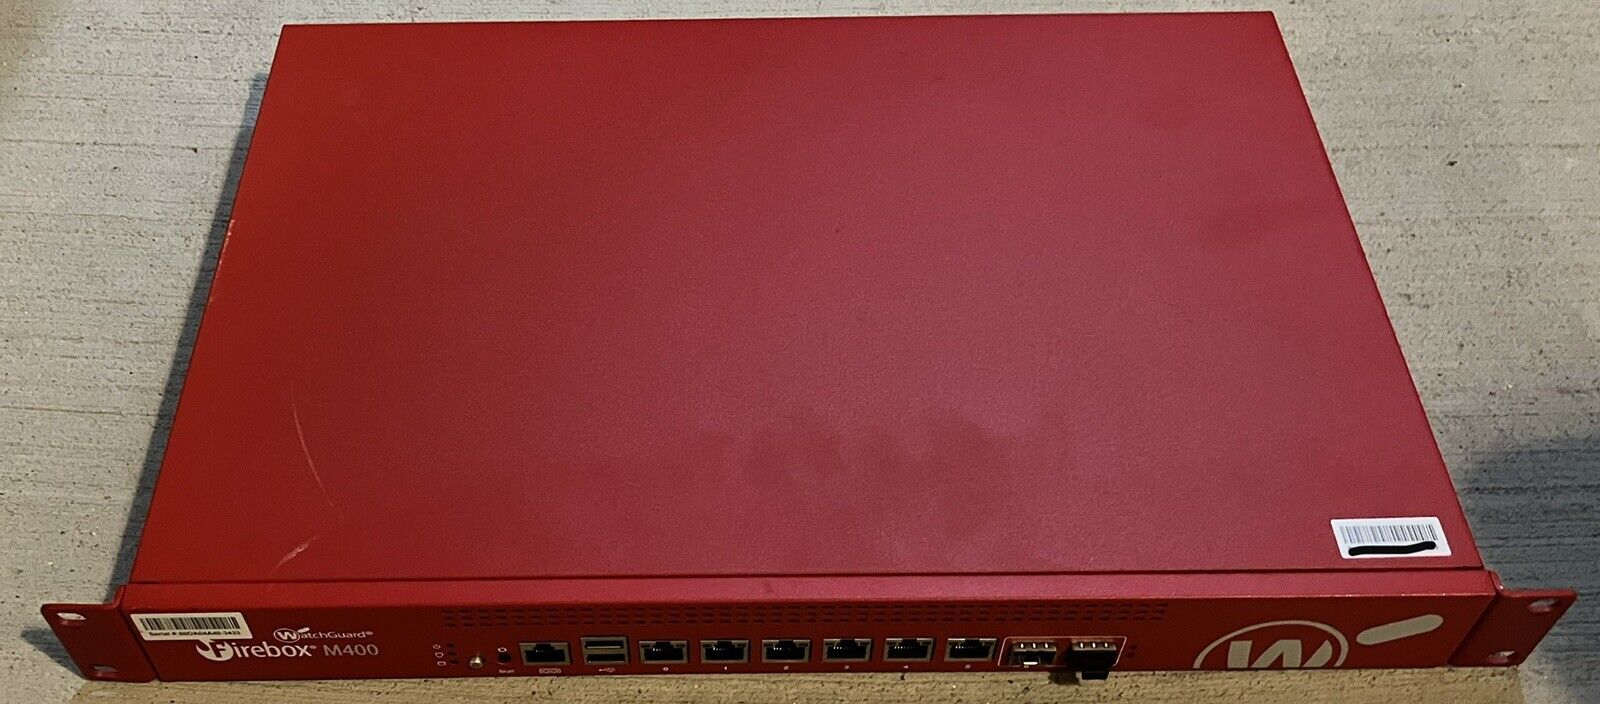 WatchGuard Firebox M400 Firewall (KL5AE8)